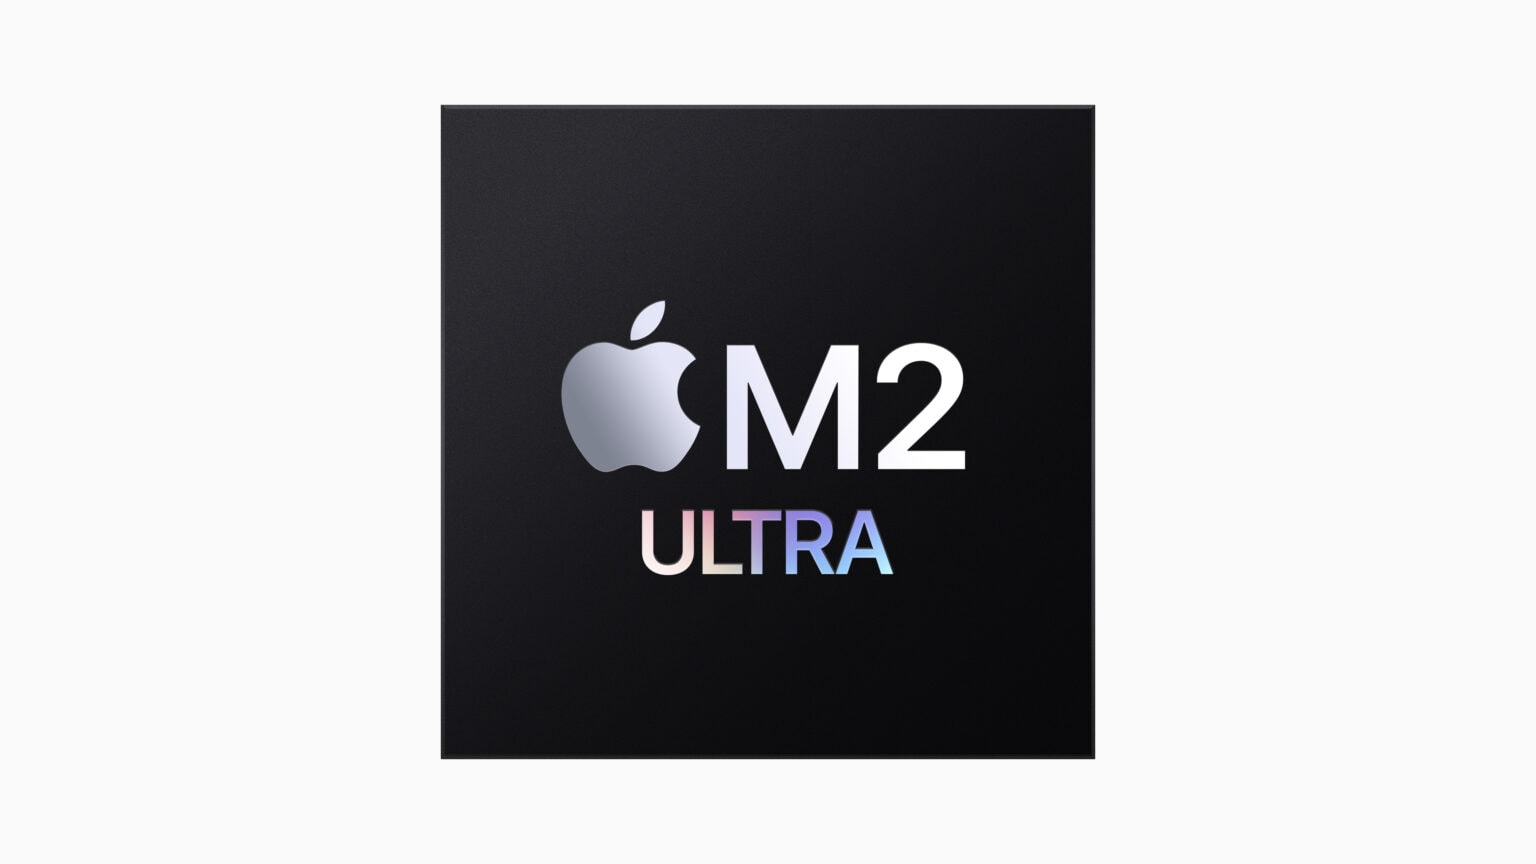 Apple M2 Ultra processor from WWDC23